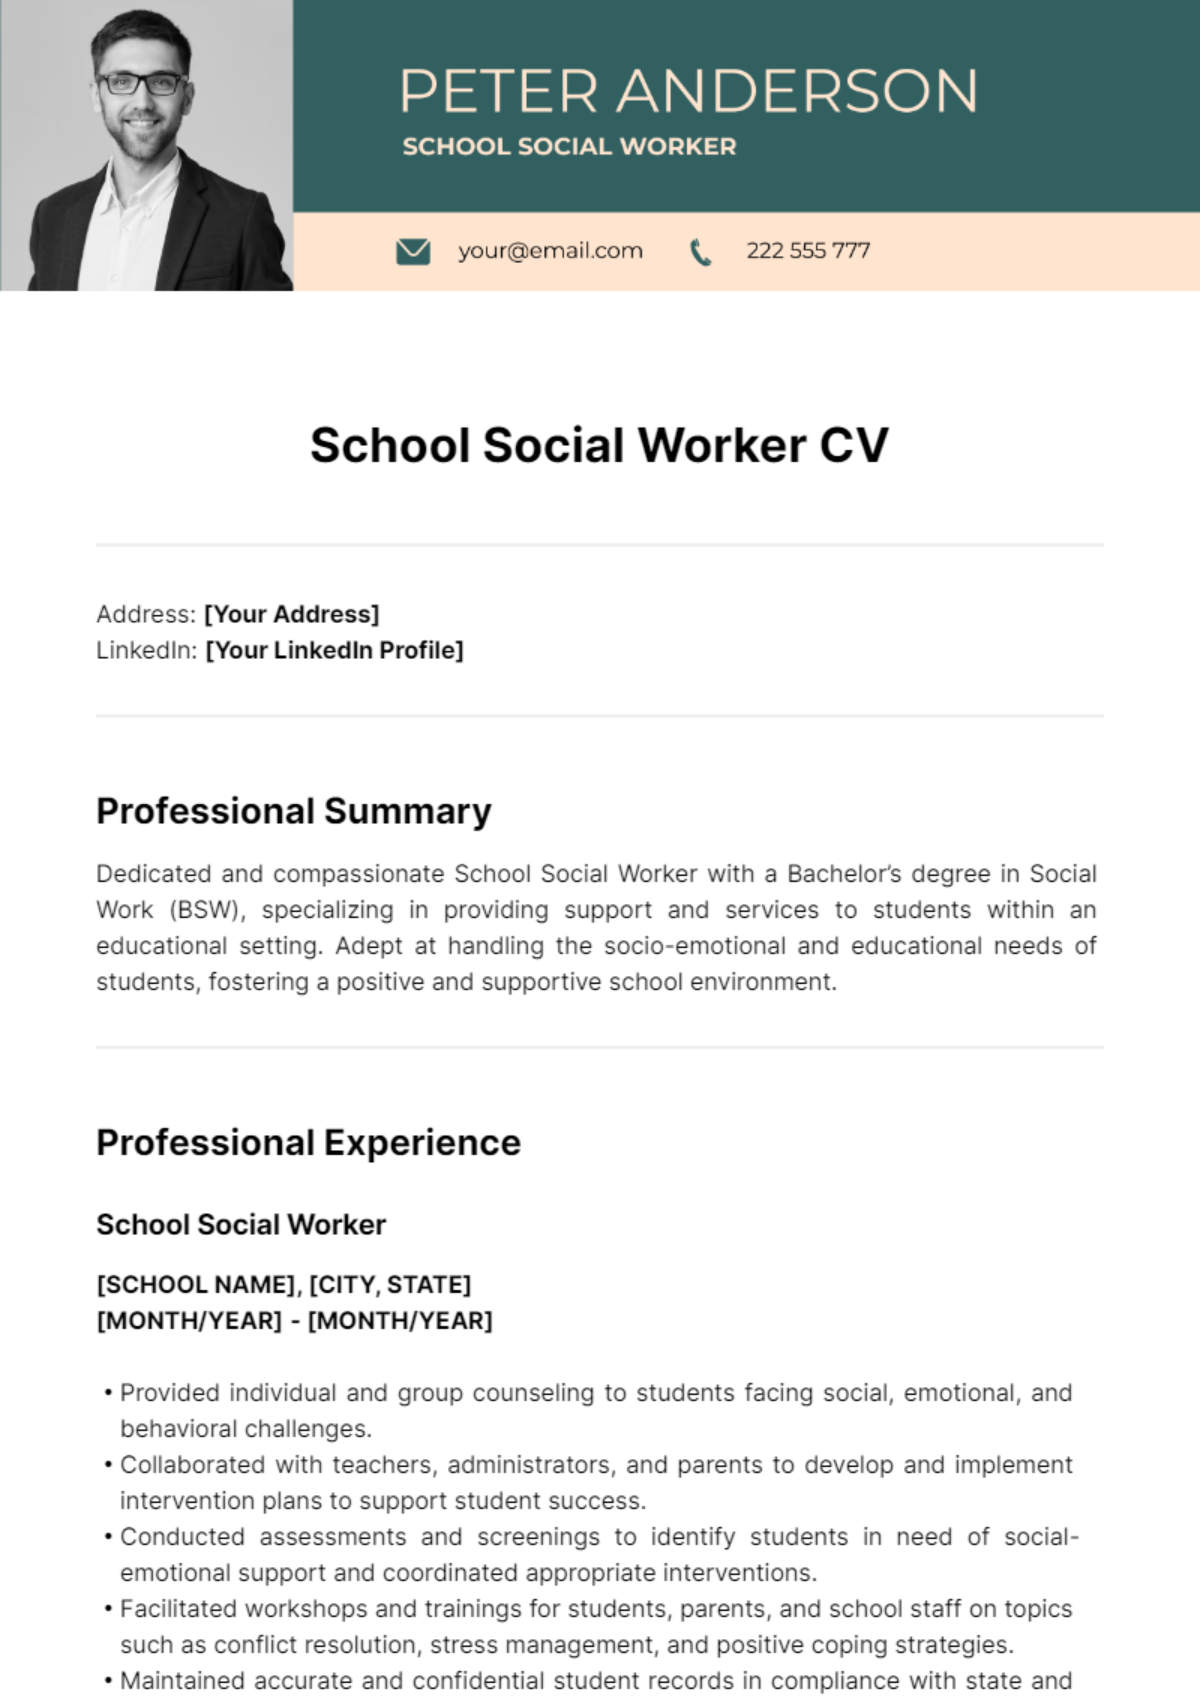 School Social Worker CV Template